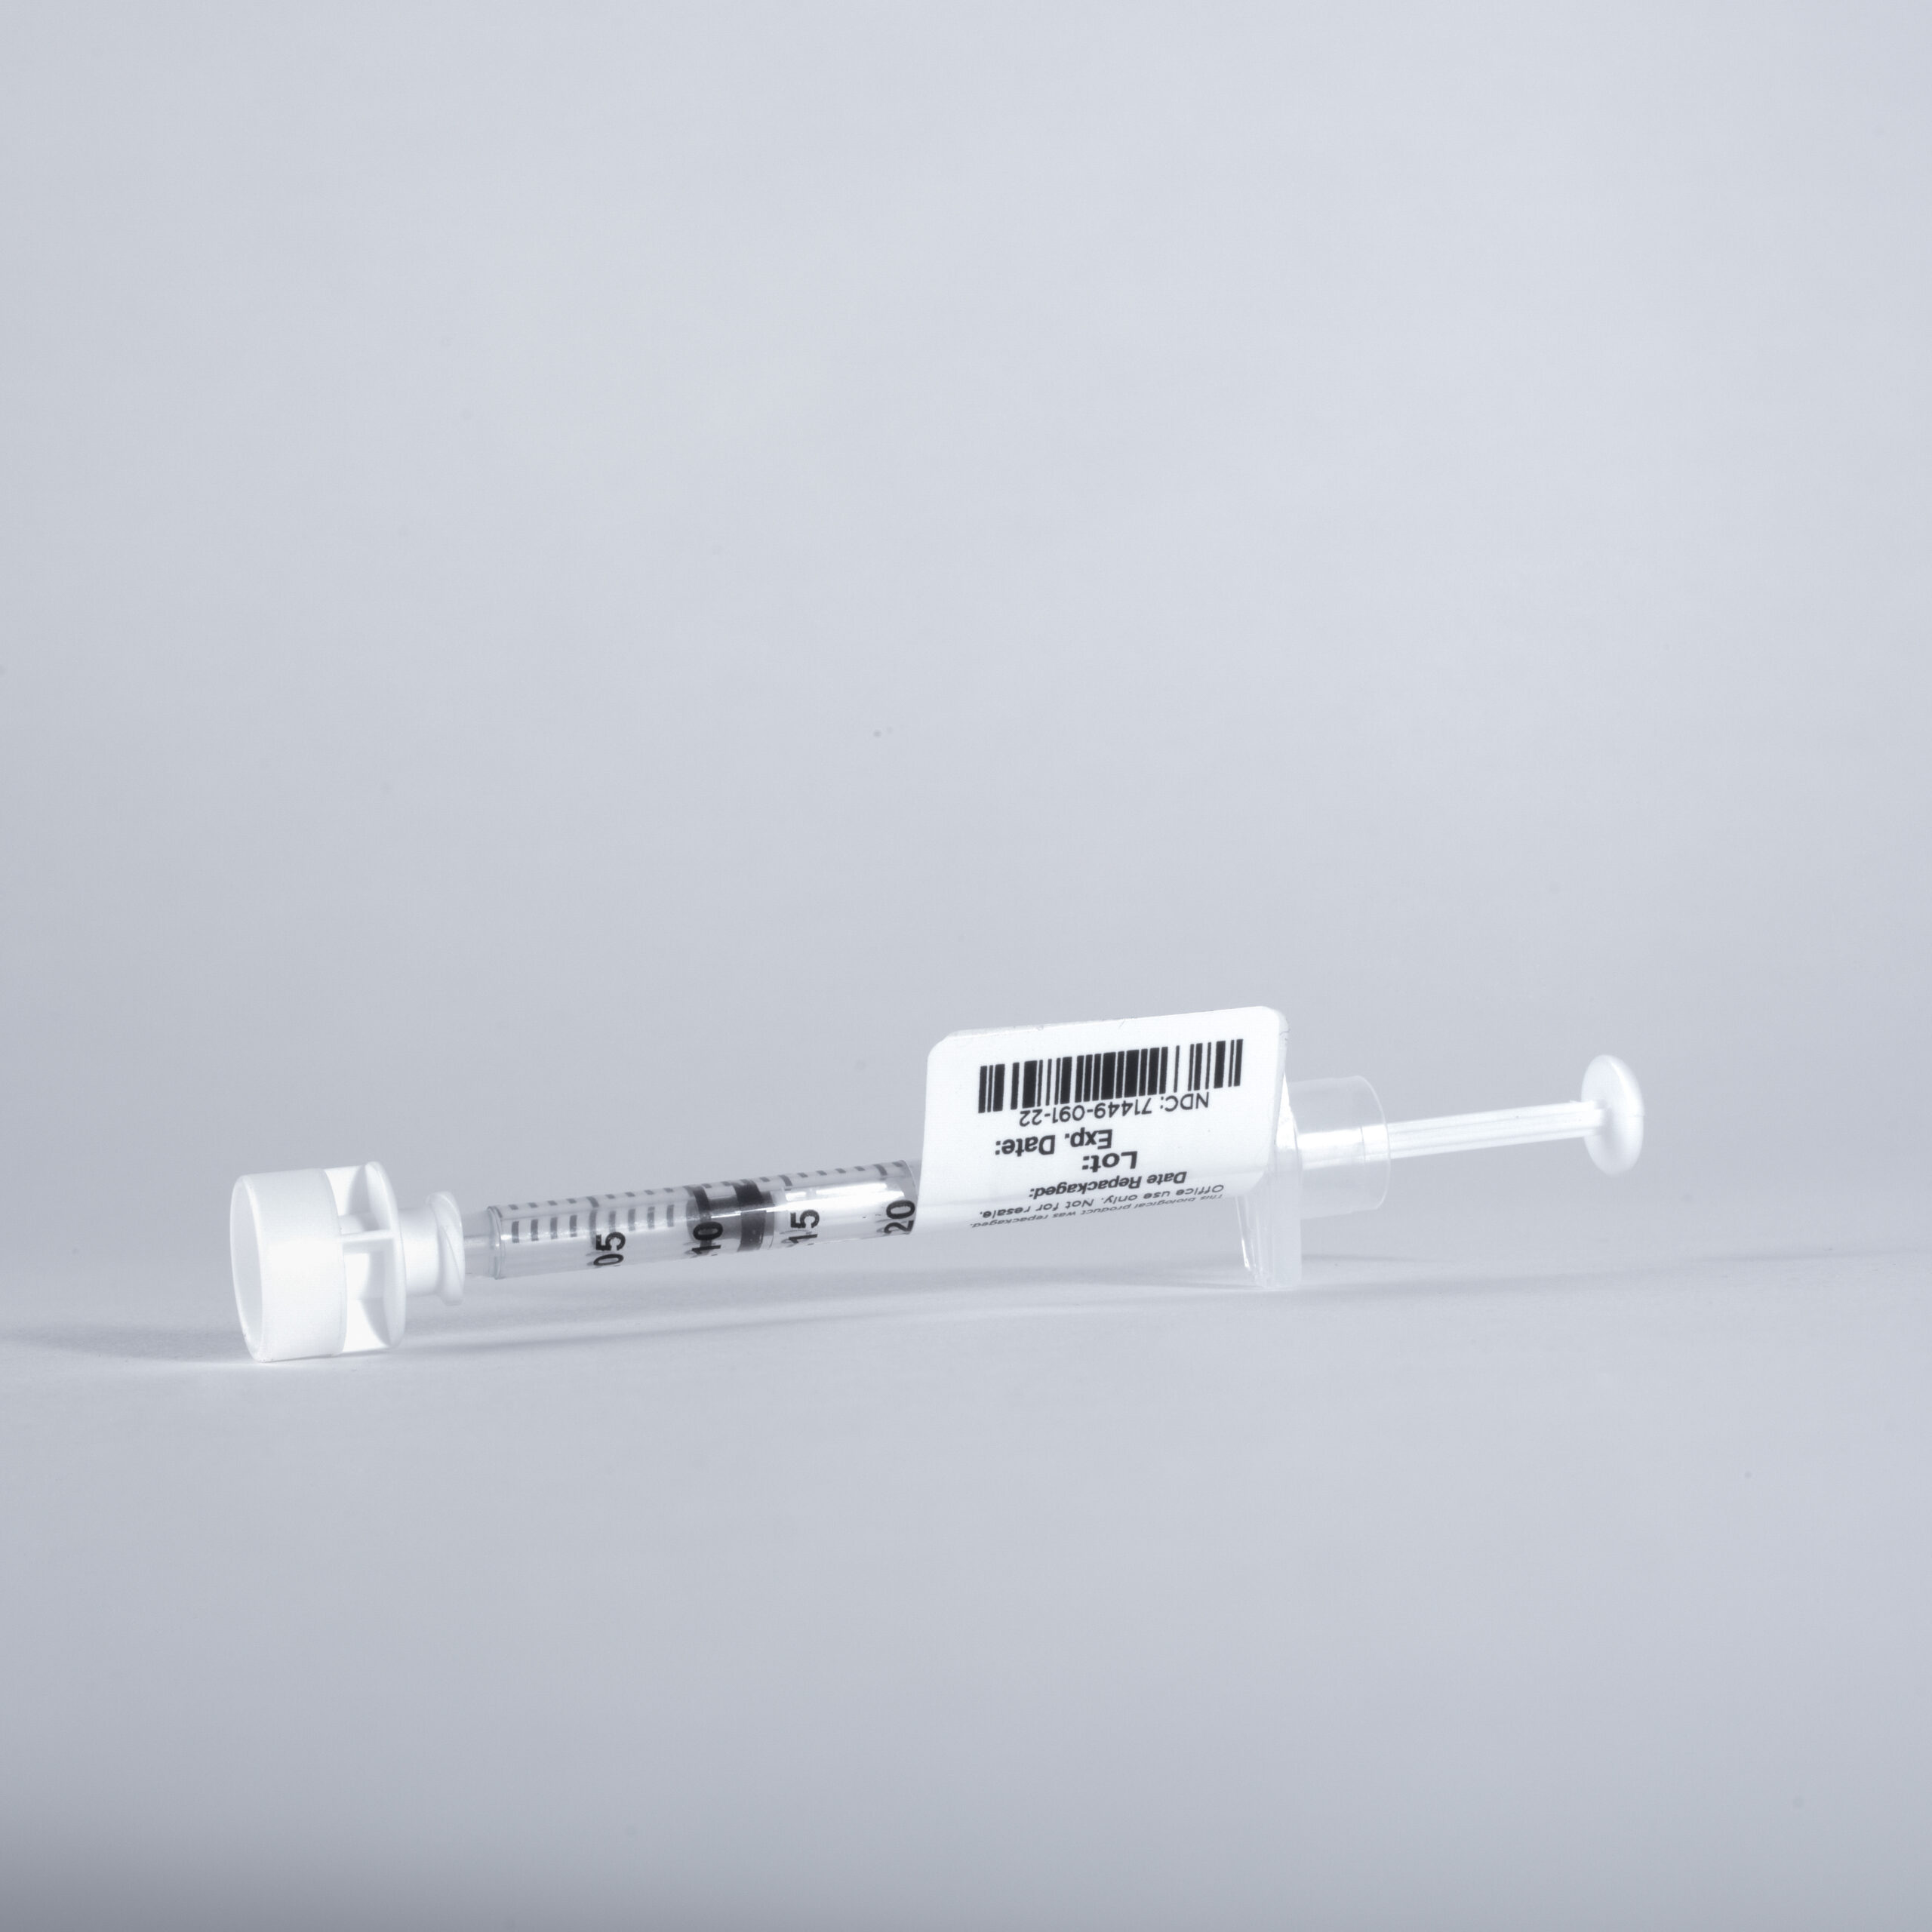 Bevacizumab (Avastin®) 2 mg/0.08 mL, repackaged in a 0.25 mL Syringe